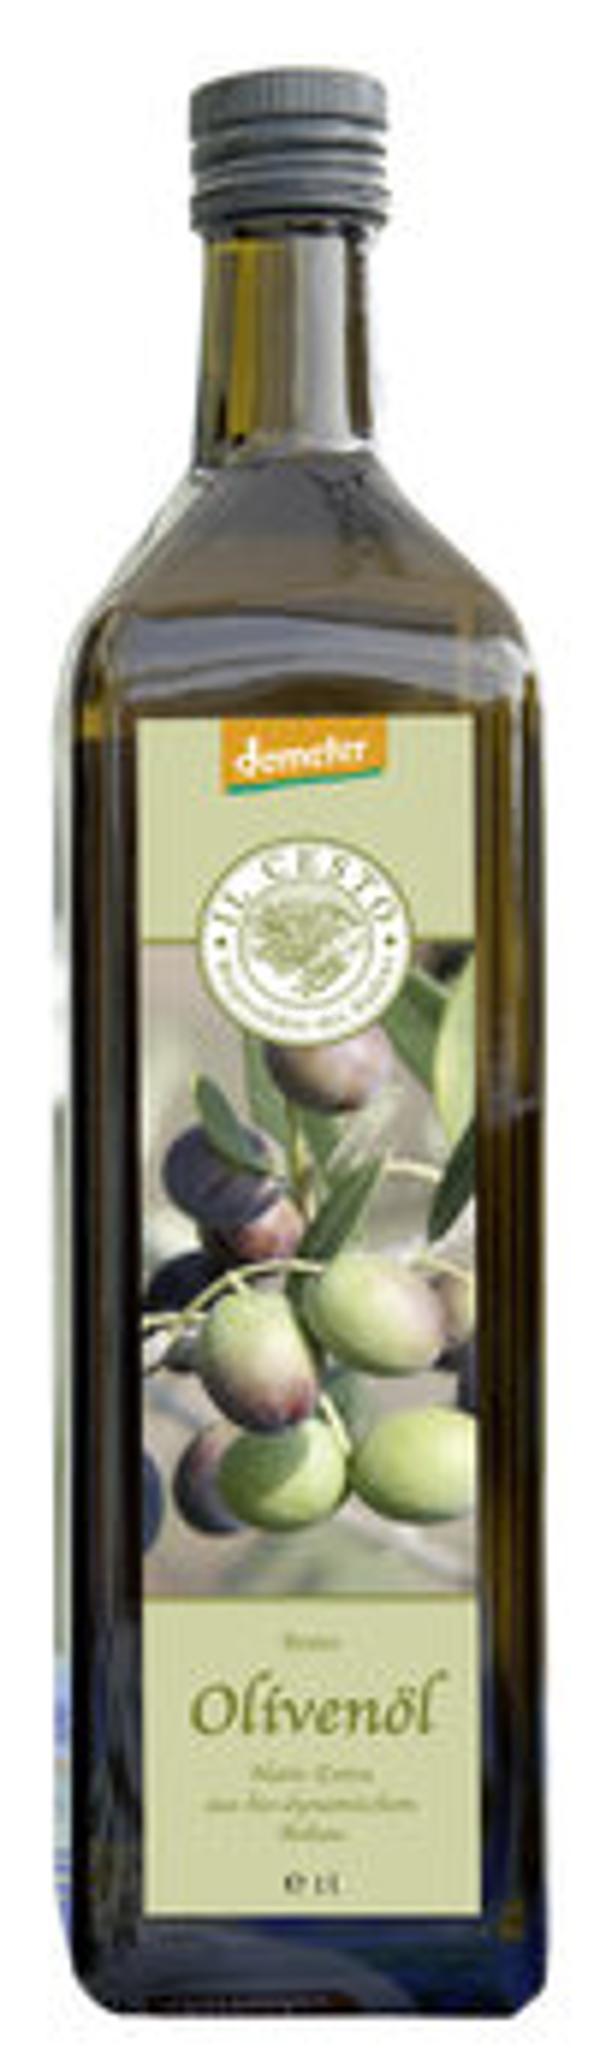 Produktfoto zu Olivenöl, 1 l